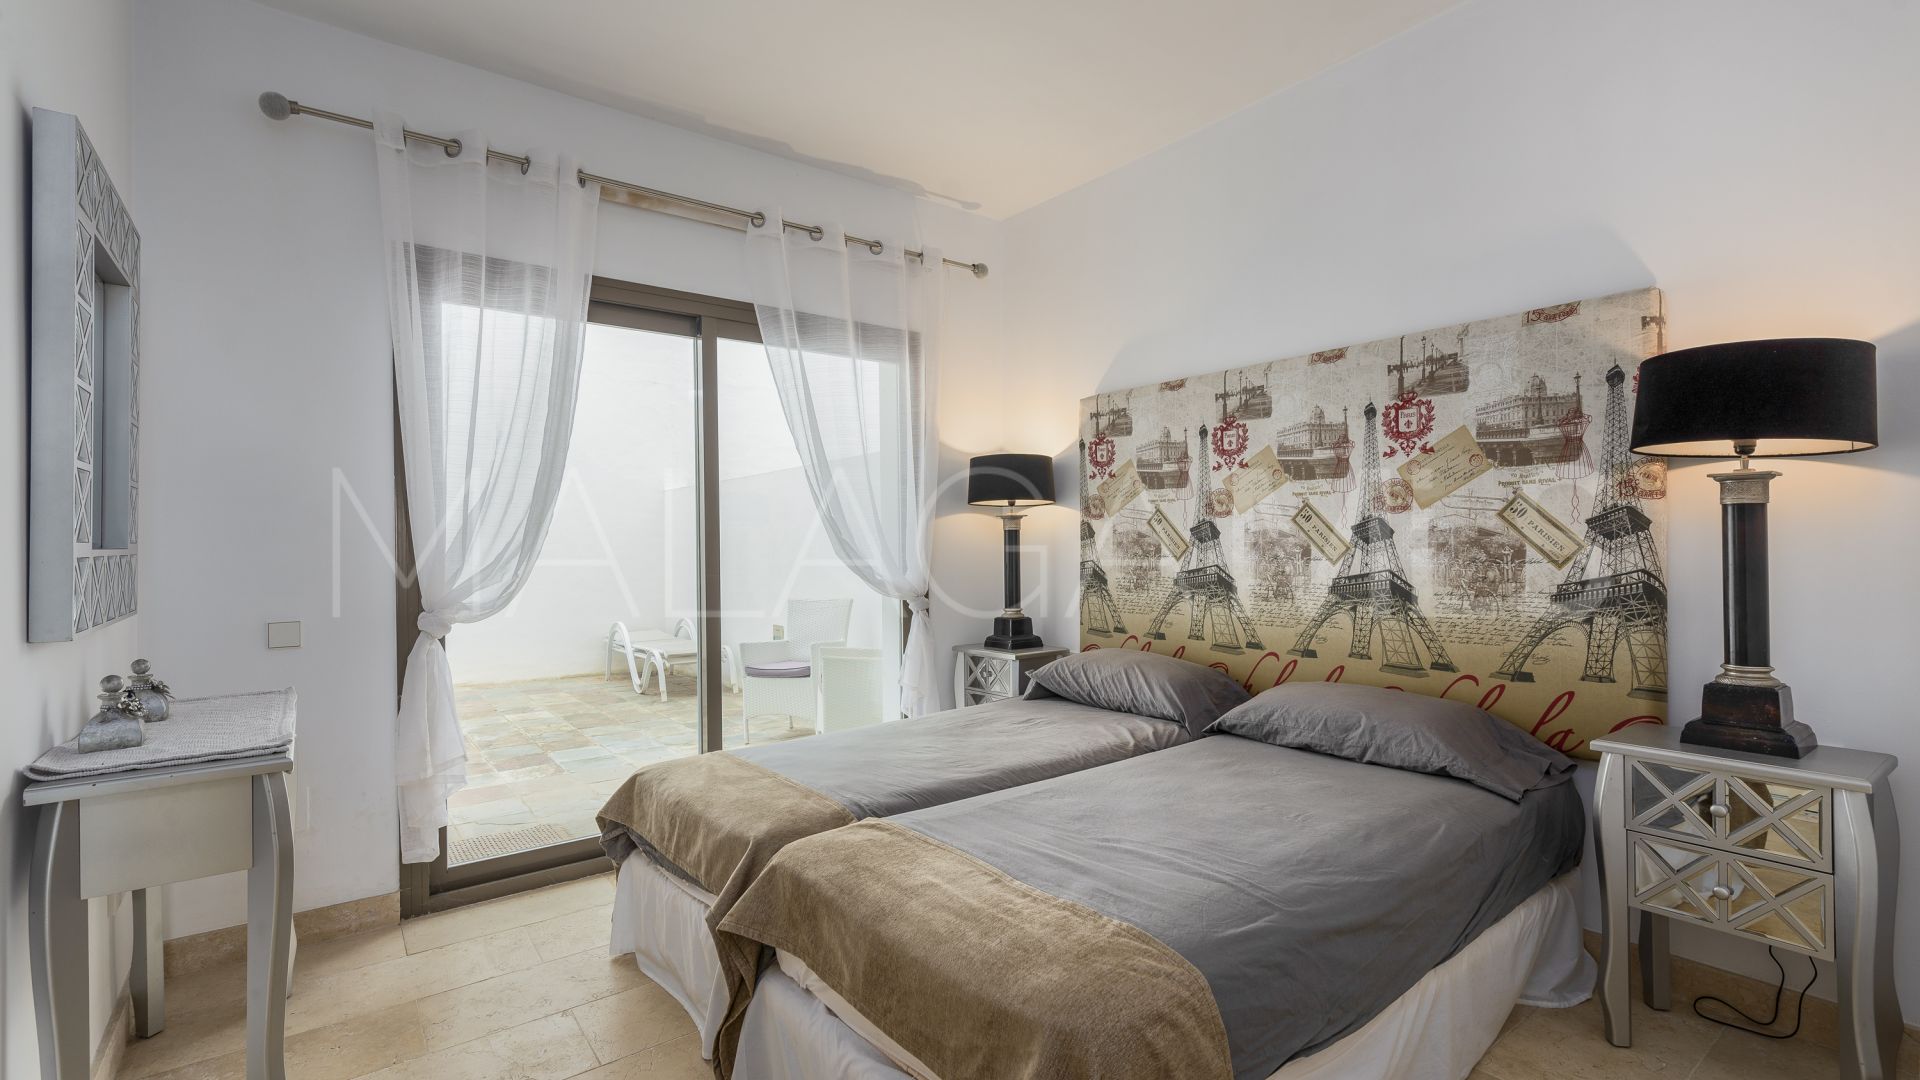 For sale ground floor apartment in Finca Cortesin with 2 bedrooms